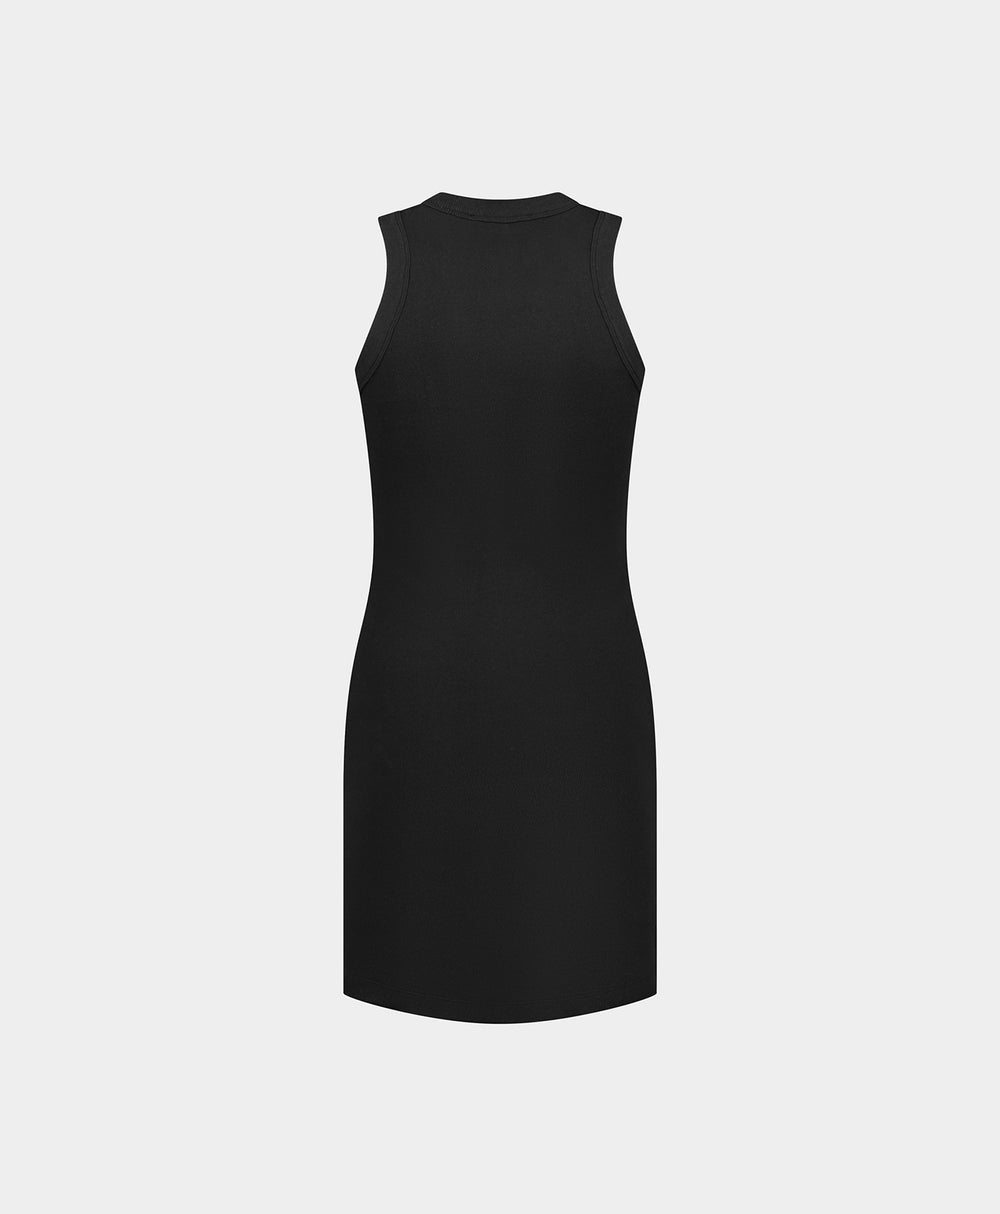 DP - Black Reece Dress - Packshot - Rear